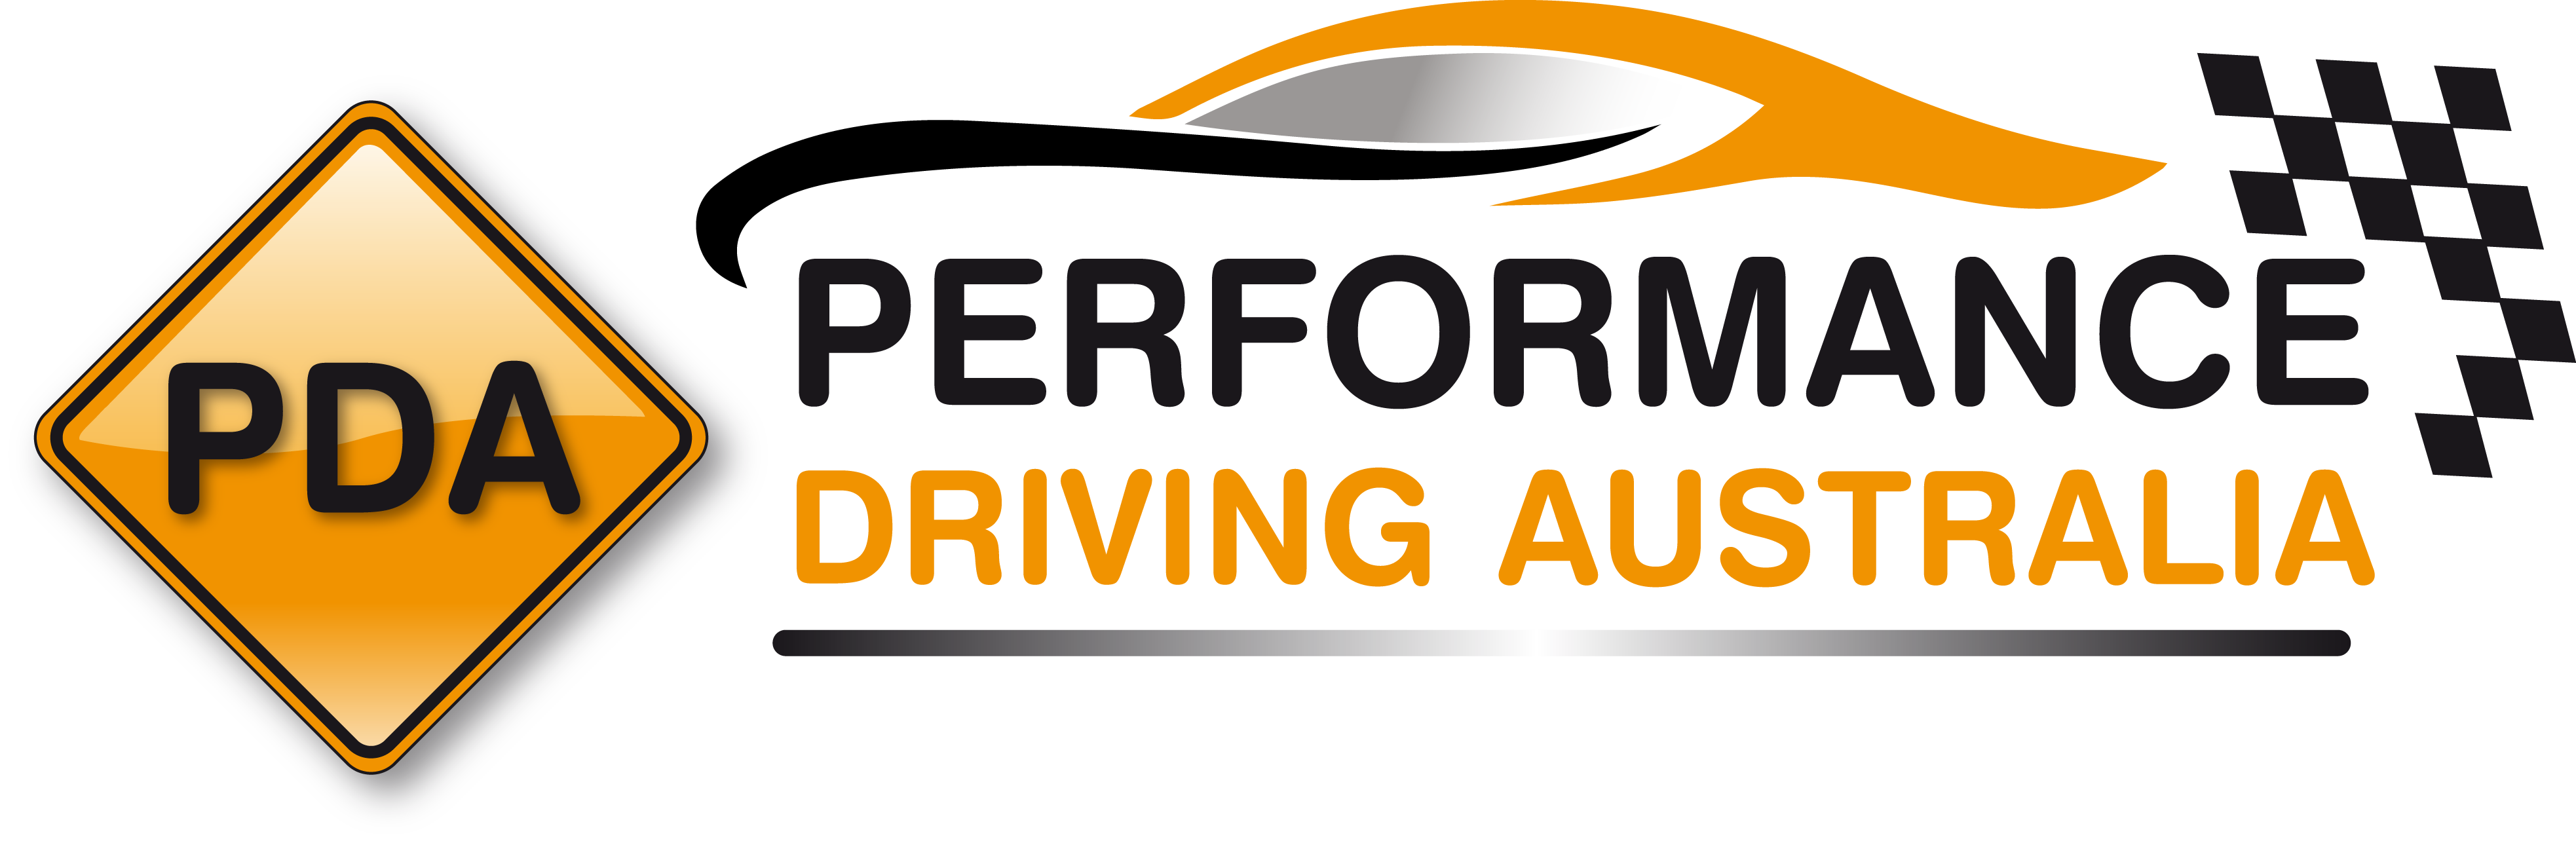 Driver performance. Performance логотип на диске. Driver logo. Лого Driving Performance. RDRIVER logo PNG.